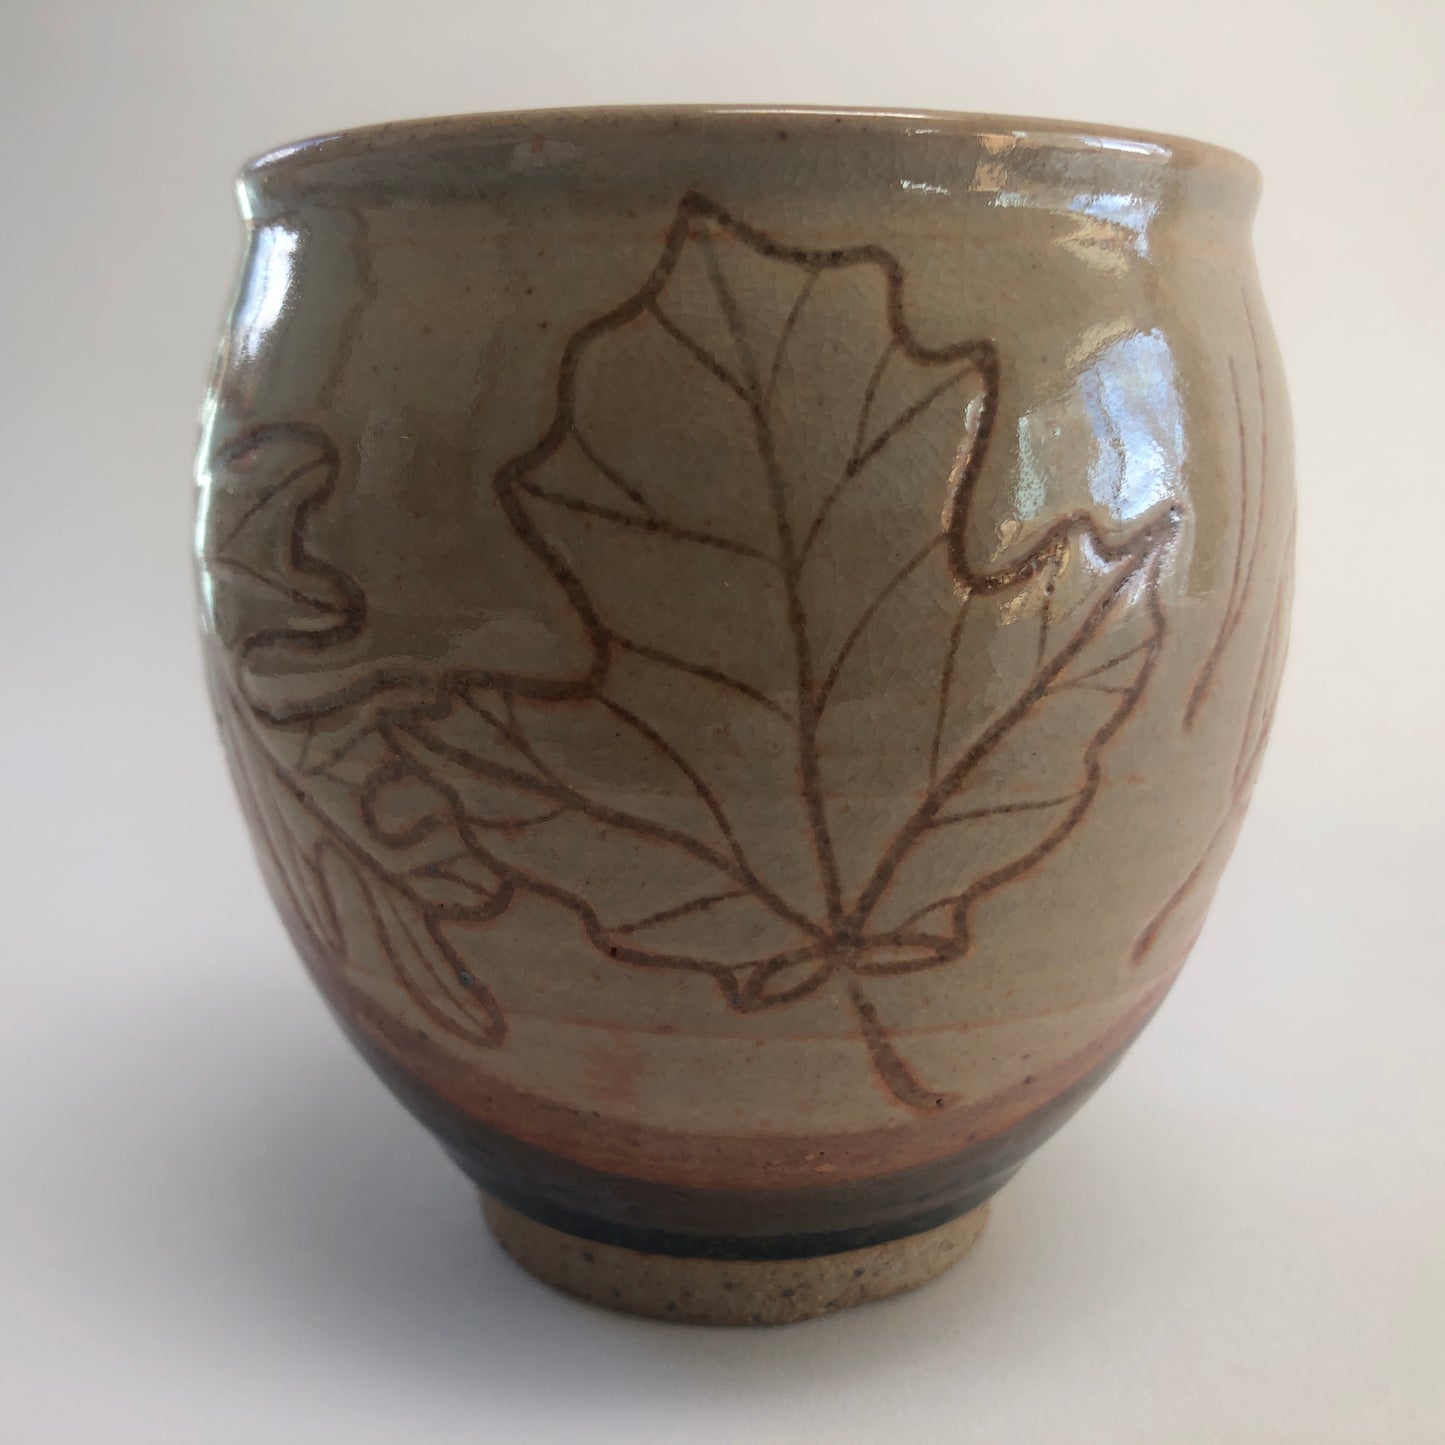 Fall Leaves Mug